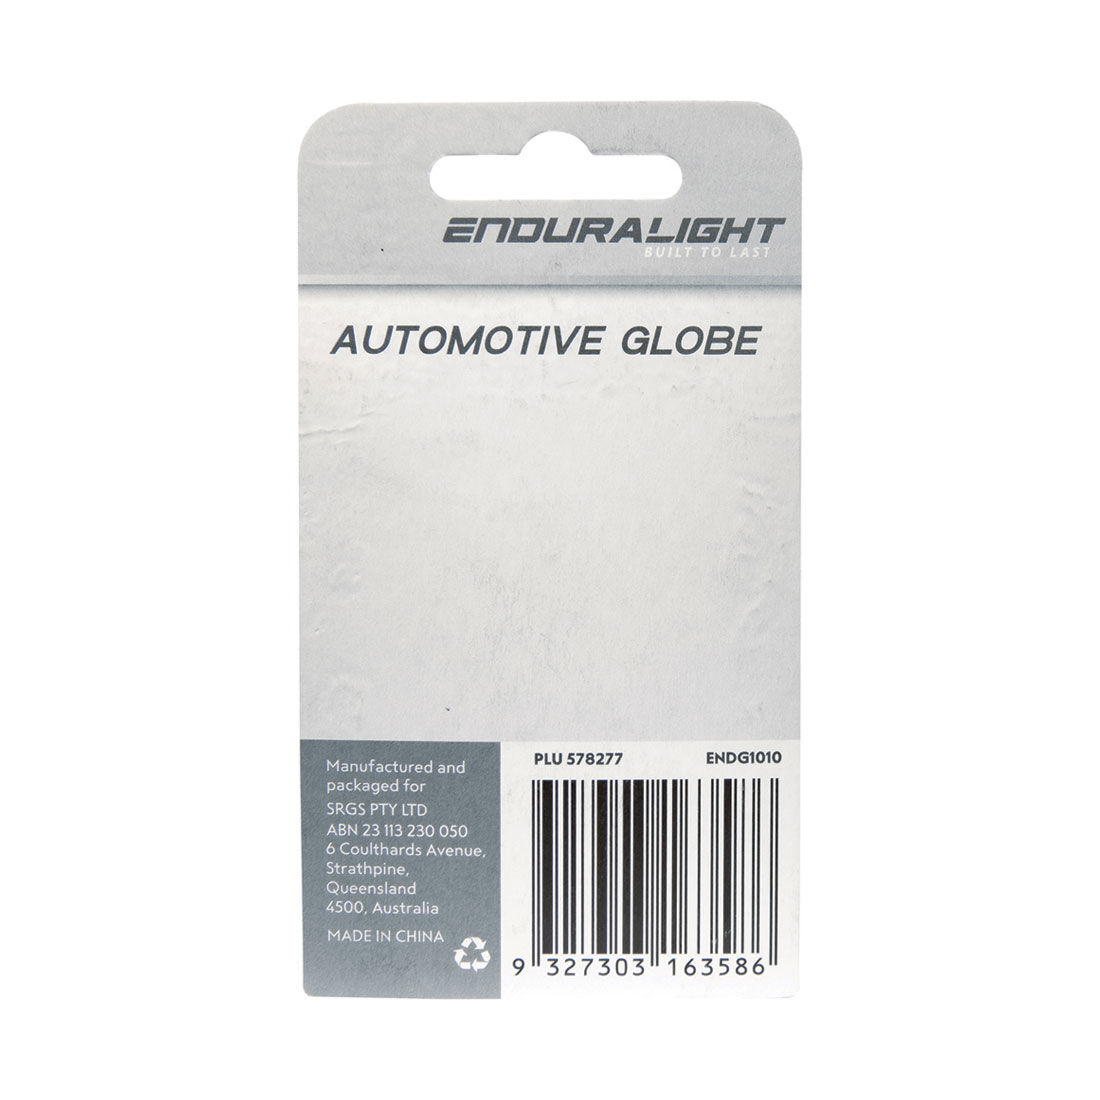 ENDURALIGHT Automotive Globes - Stop/ Tail 12V, 21/5W, BAY15D, , scaau_hi-res